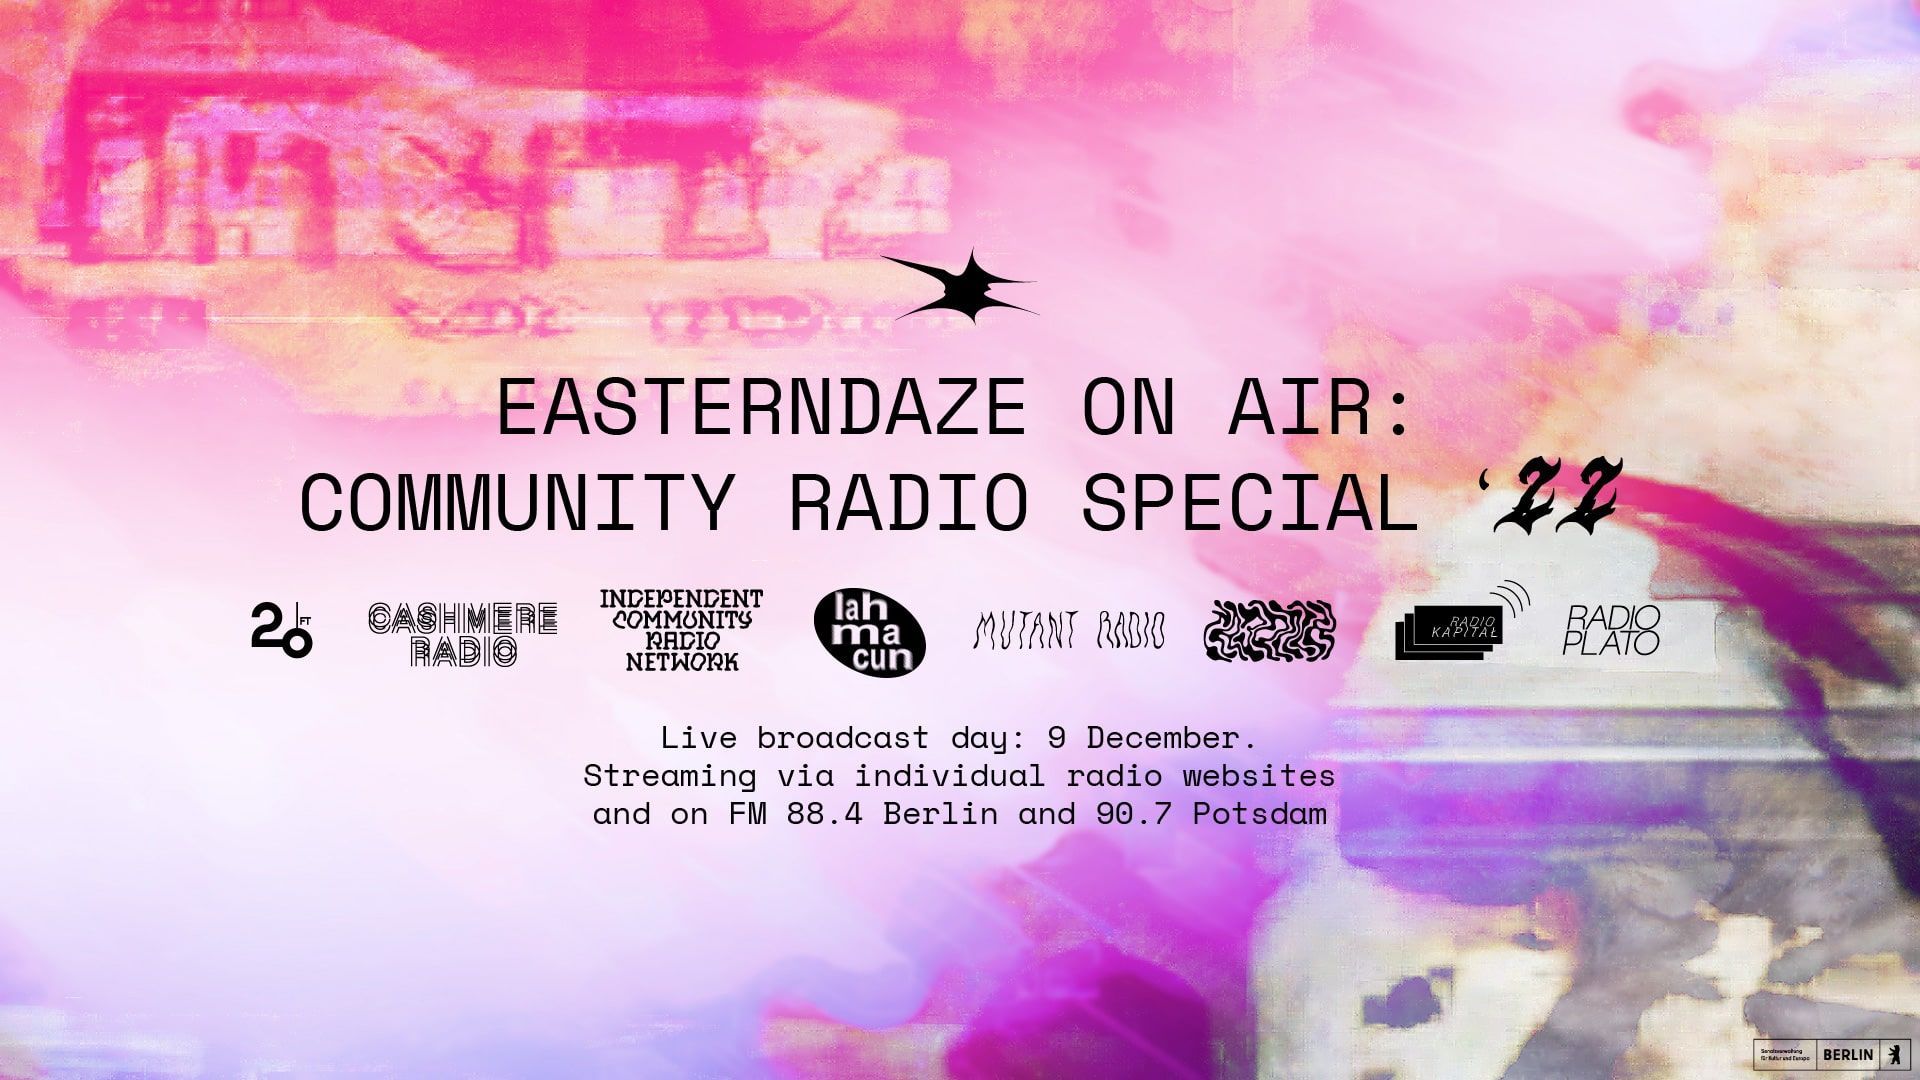 radio plato takes part in easterndaze on air